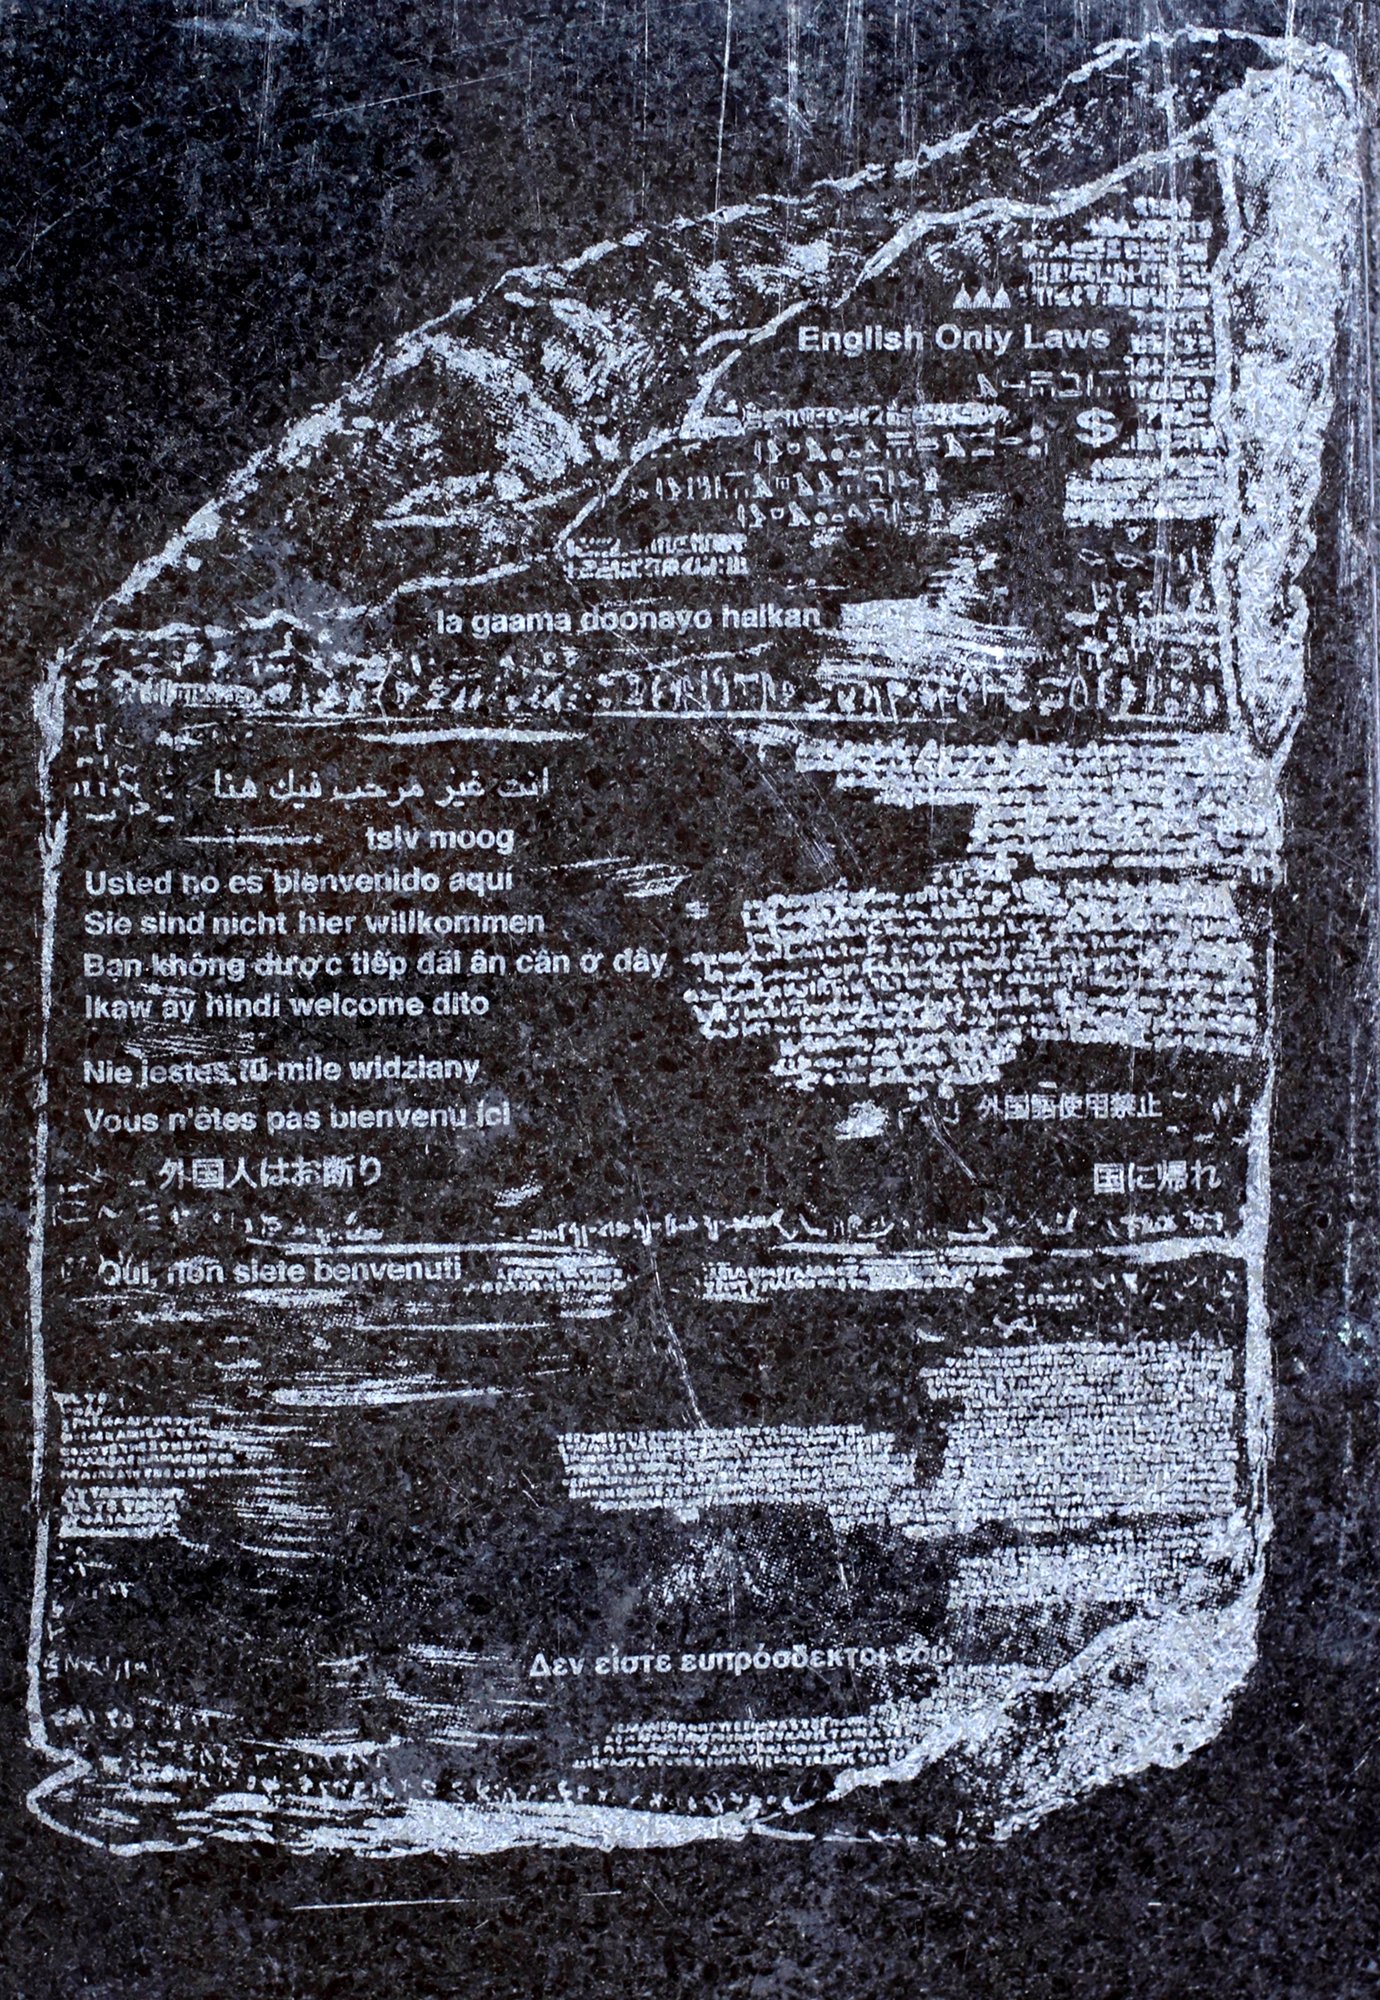 Rosetta Stone of Babel